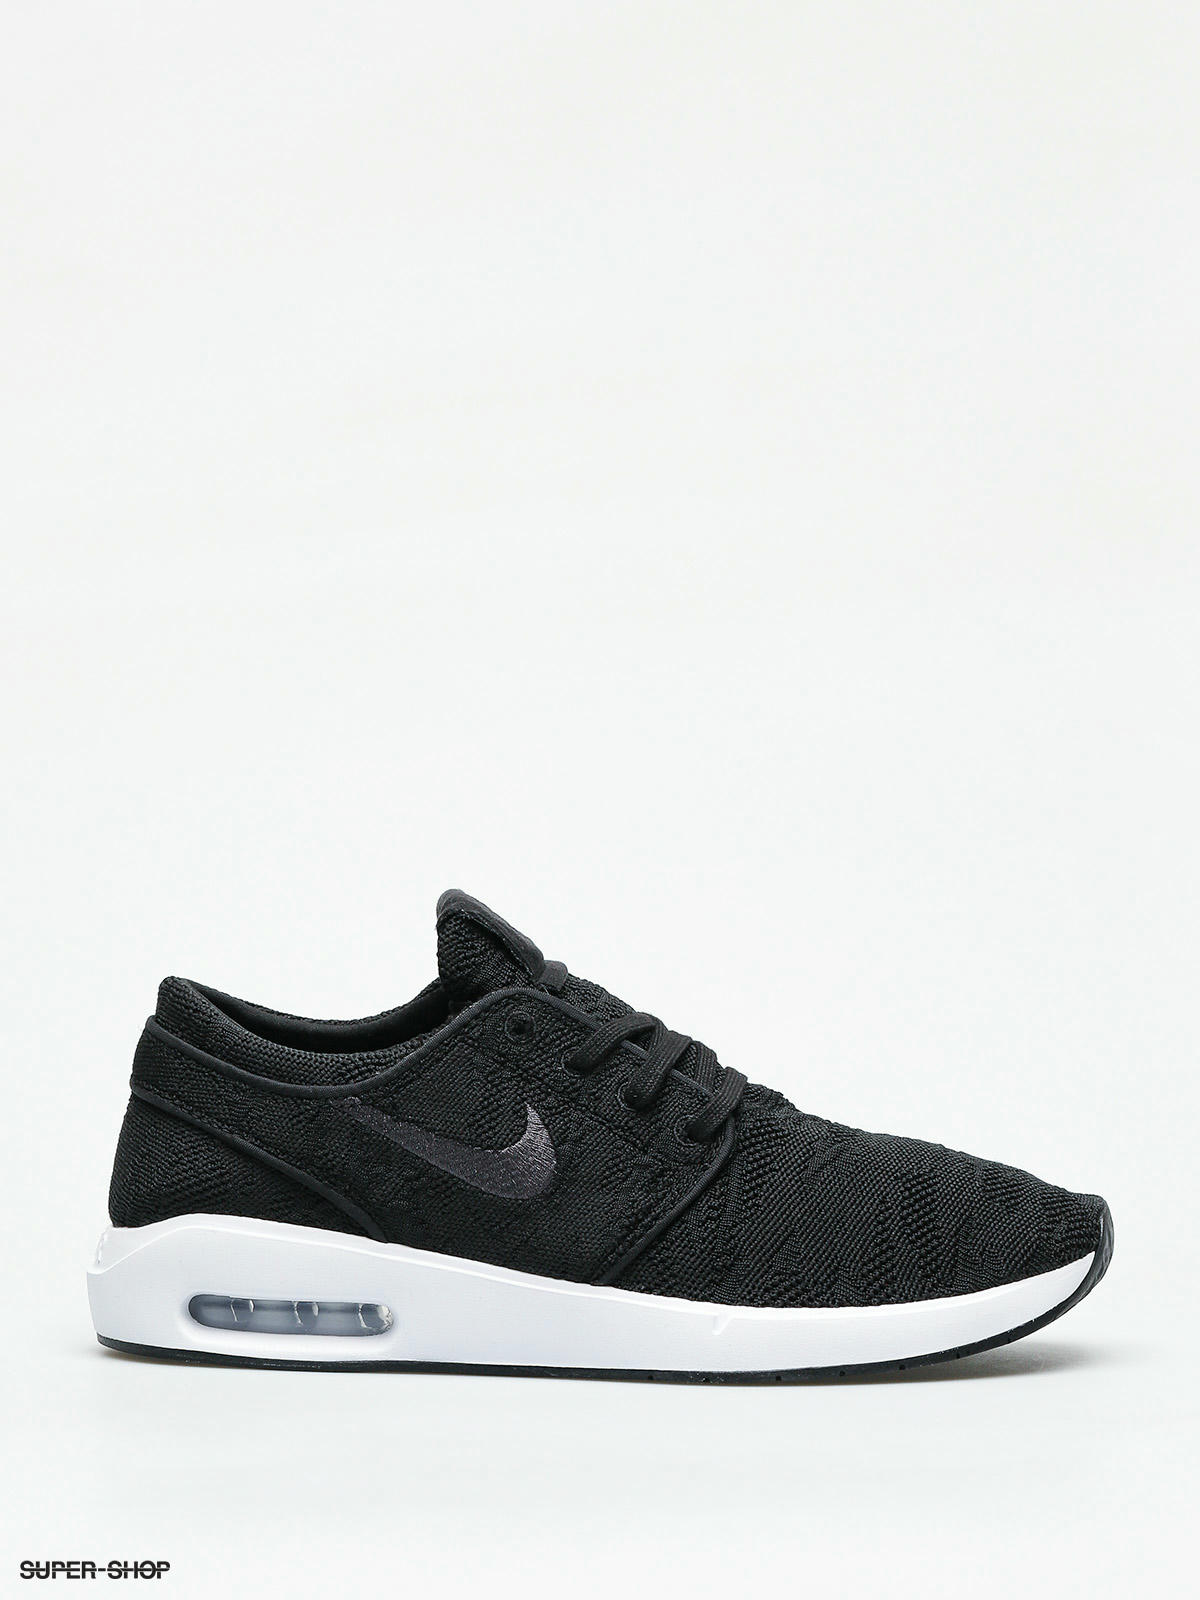 Nike SB Air Janoski 2 Shoes (black/anthracite white)